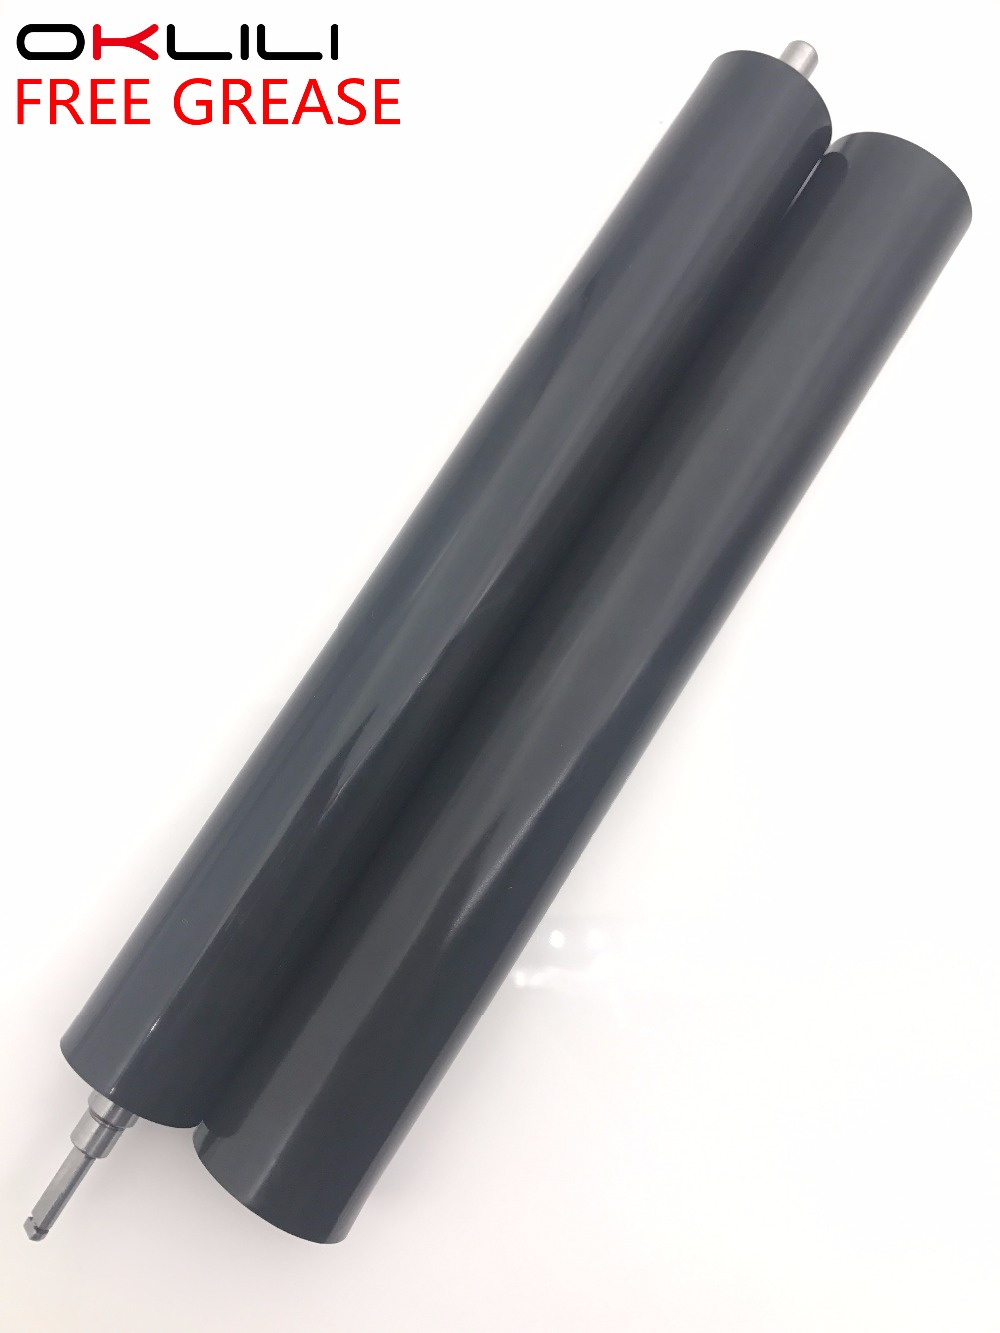 1SETX Fuser Film Sleeve Pressure Roller for Brother DCP L5500 L5600 L5650 HL L5000 L5100 L5200 L6200 L6250 L6300 L6400 5580 5585